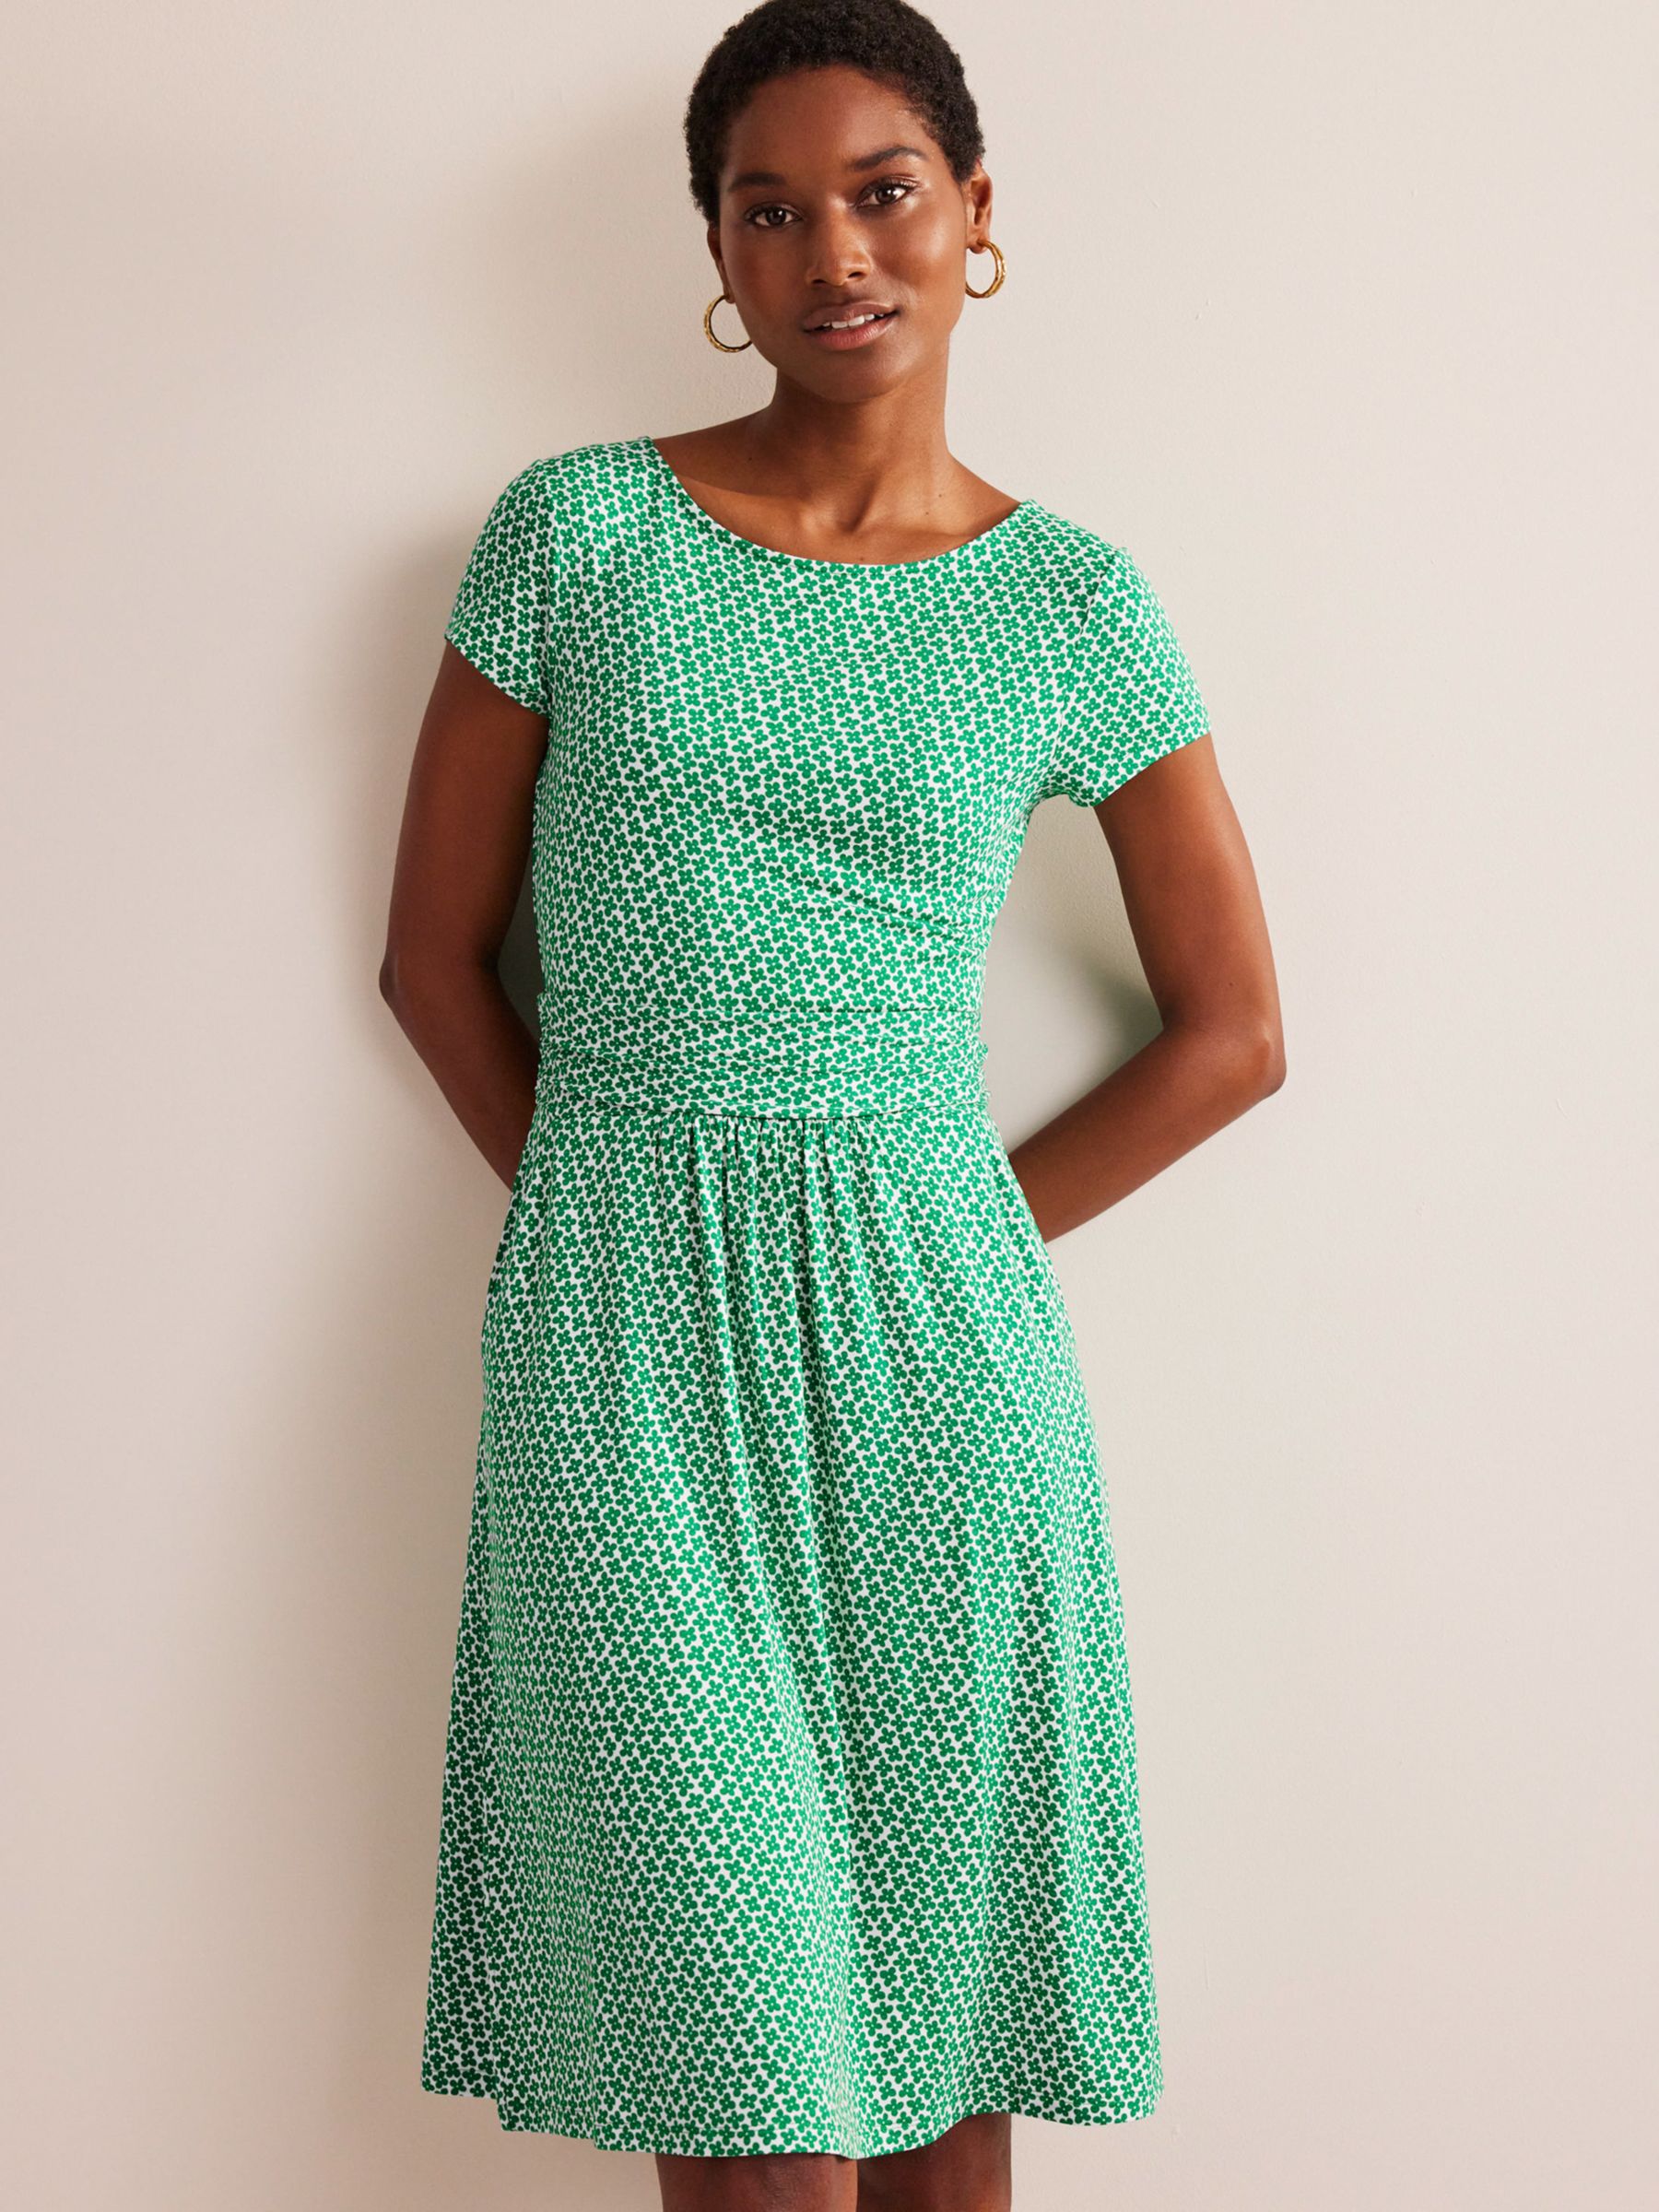 Boden Amelie Daisy Print Jersey Dress, Meadow Green, 14